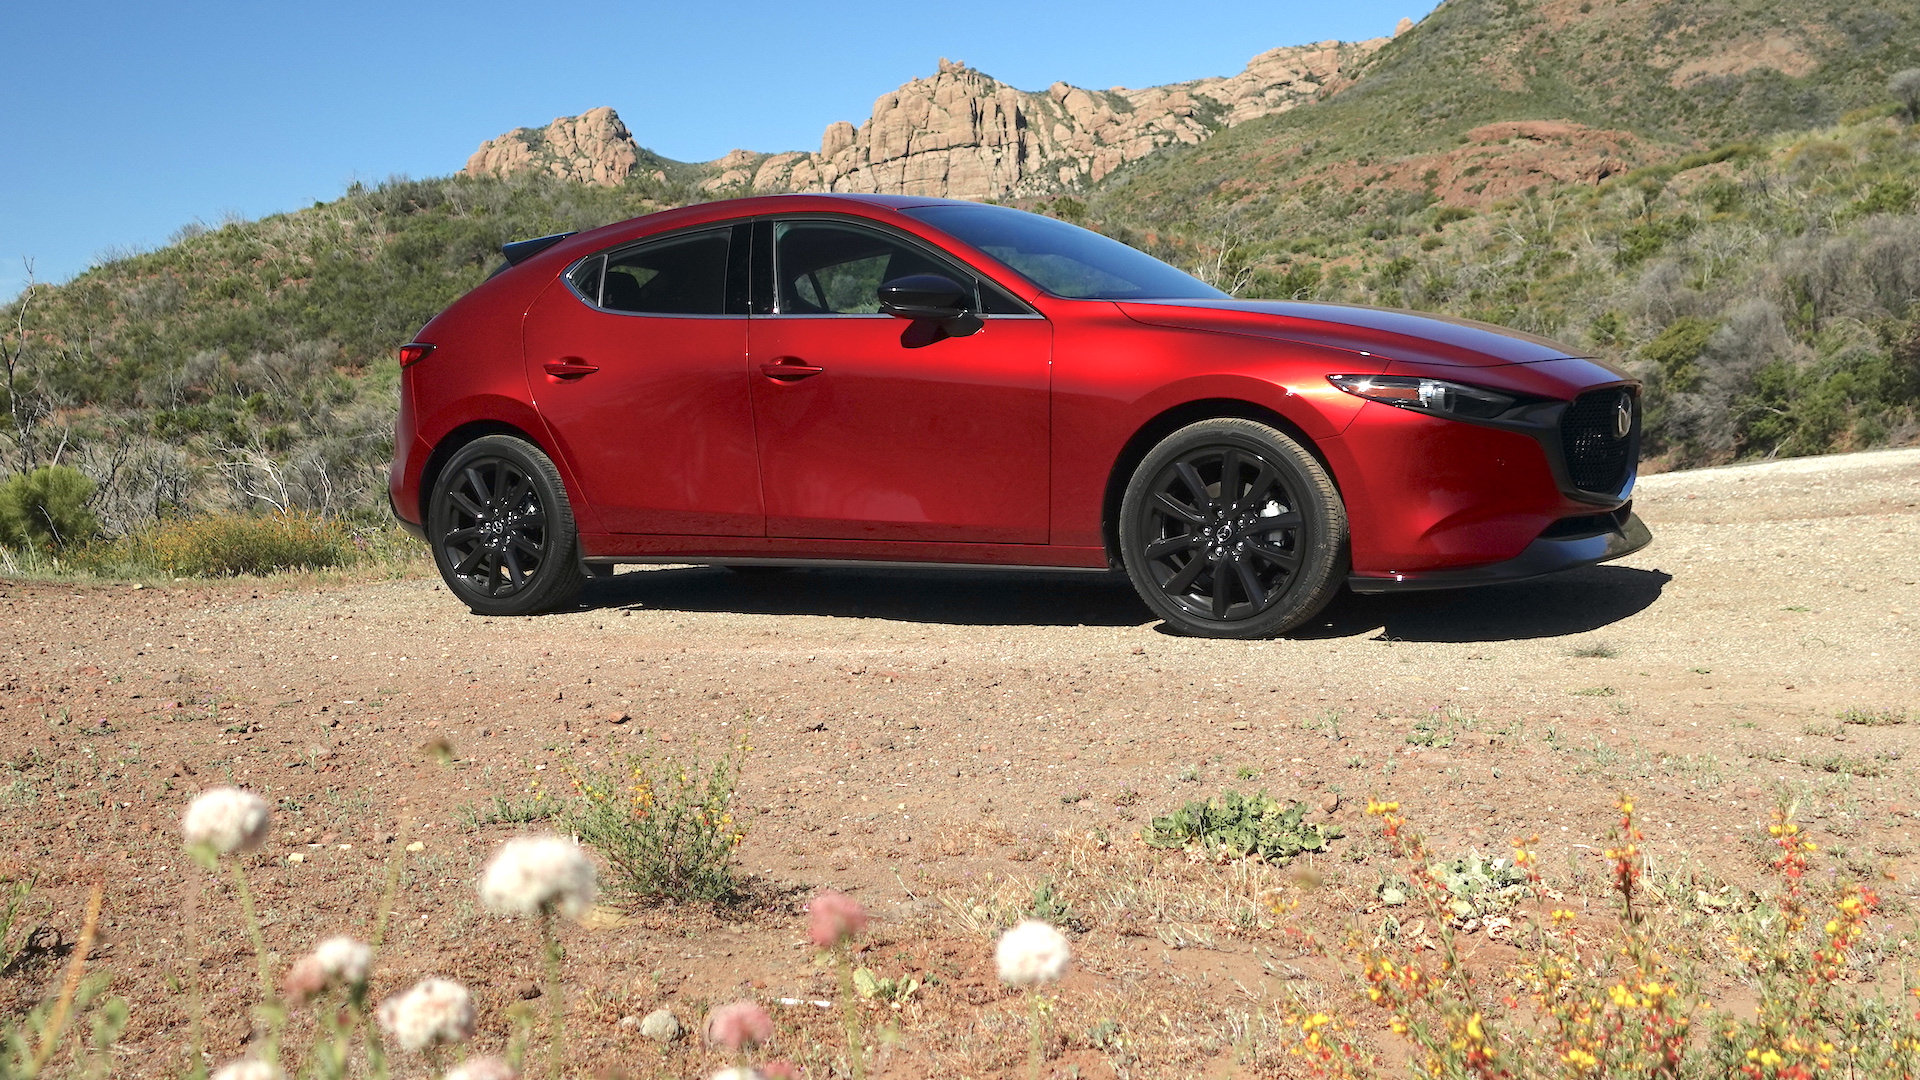 2022 Mazda 3 Turbo Hatchback Review: Mastering the Mundane